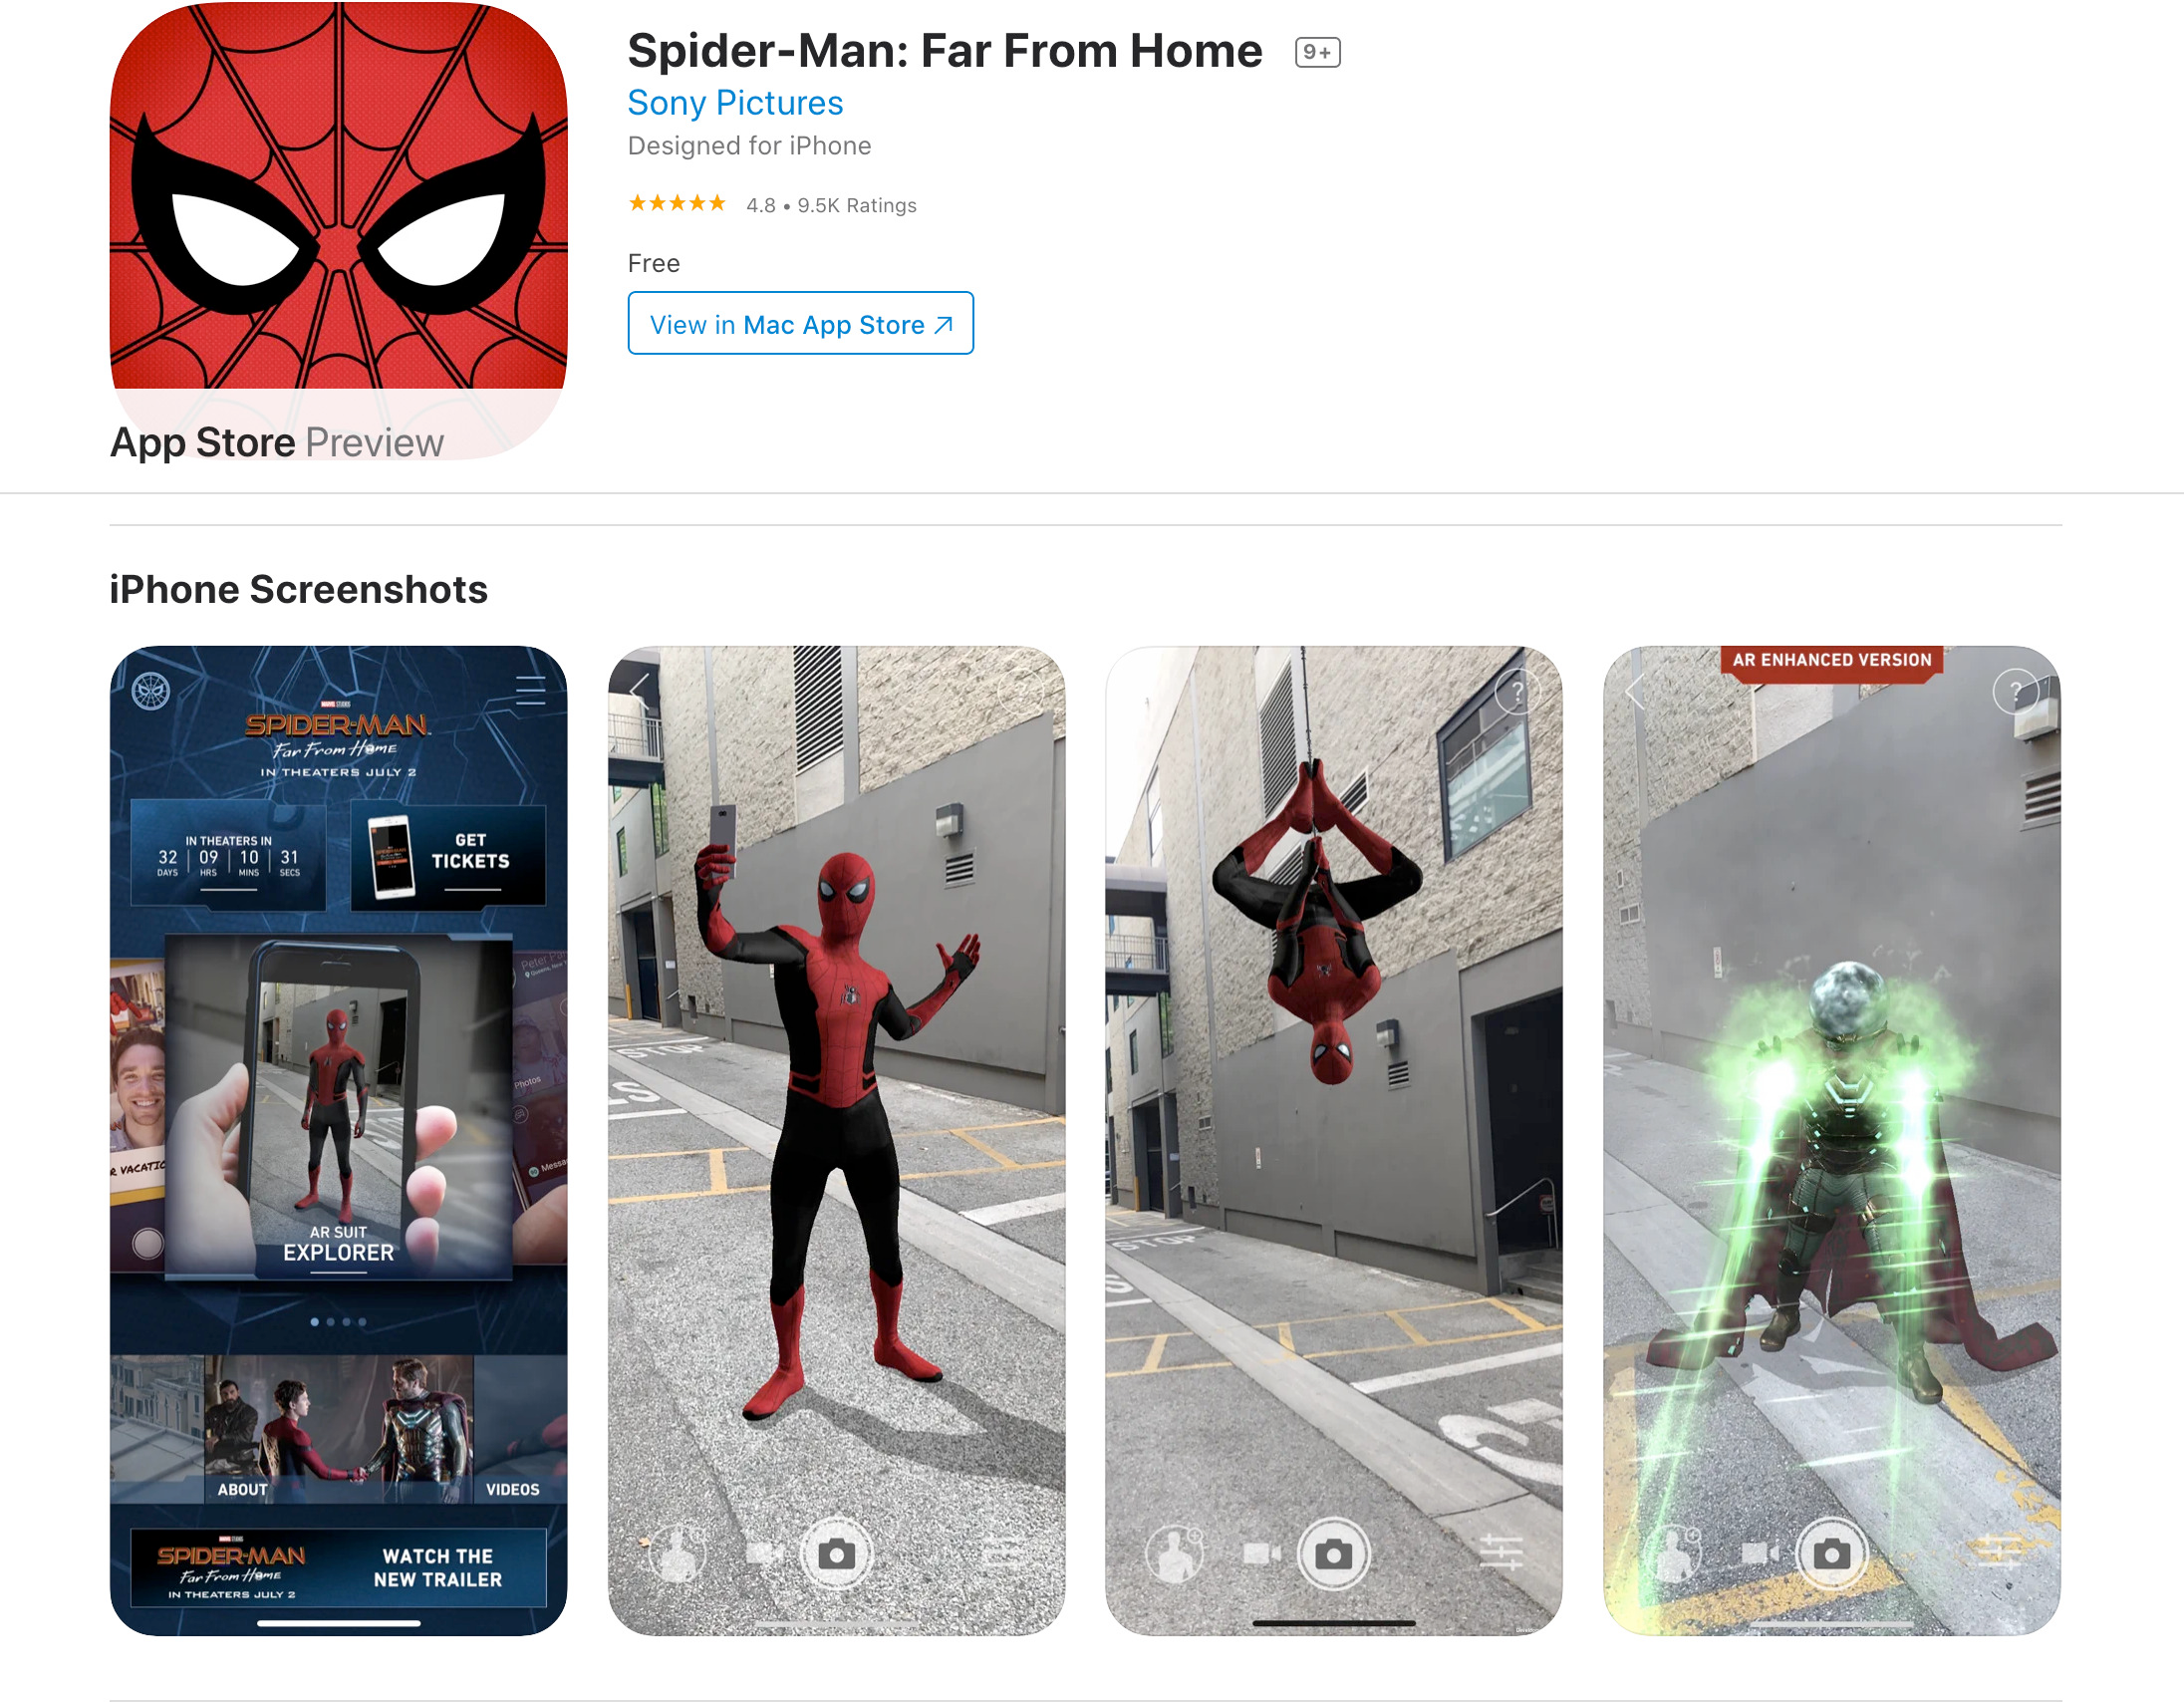 [Try out the Spider-Man: Far from Home AR Experience](https://cdn.hashnode.com/res/hashnode/image/upload/v1621233306119/WbIHzH-09.html)